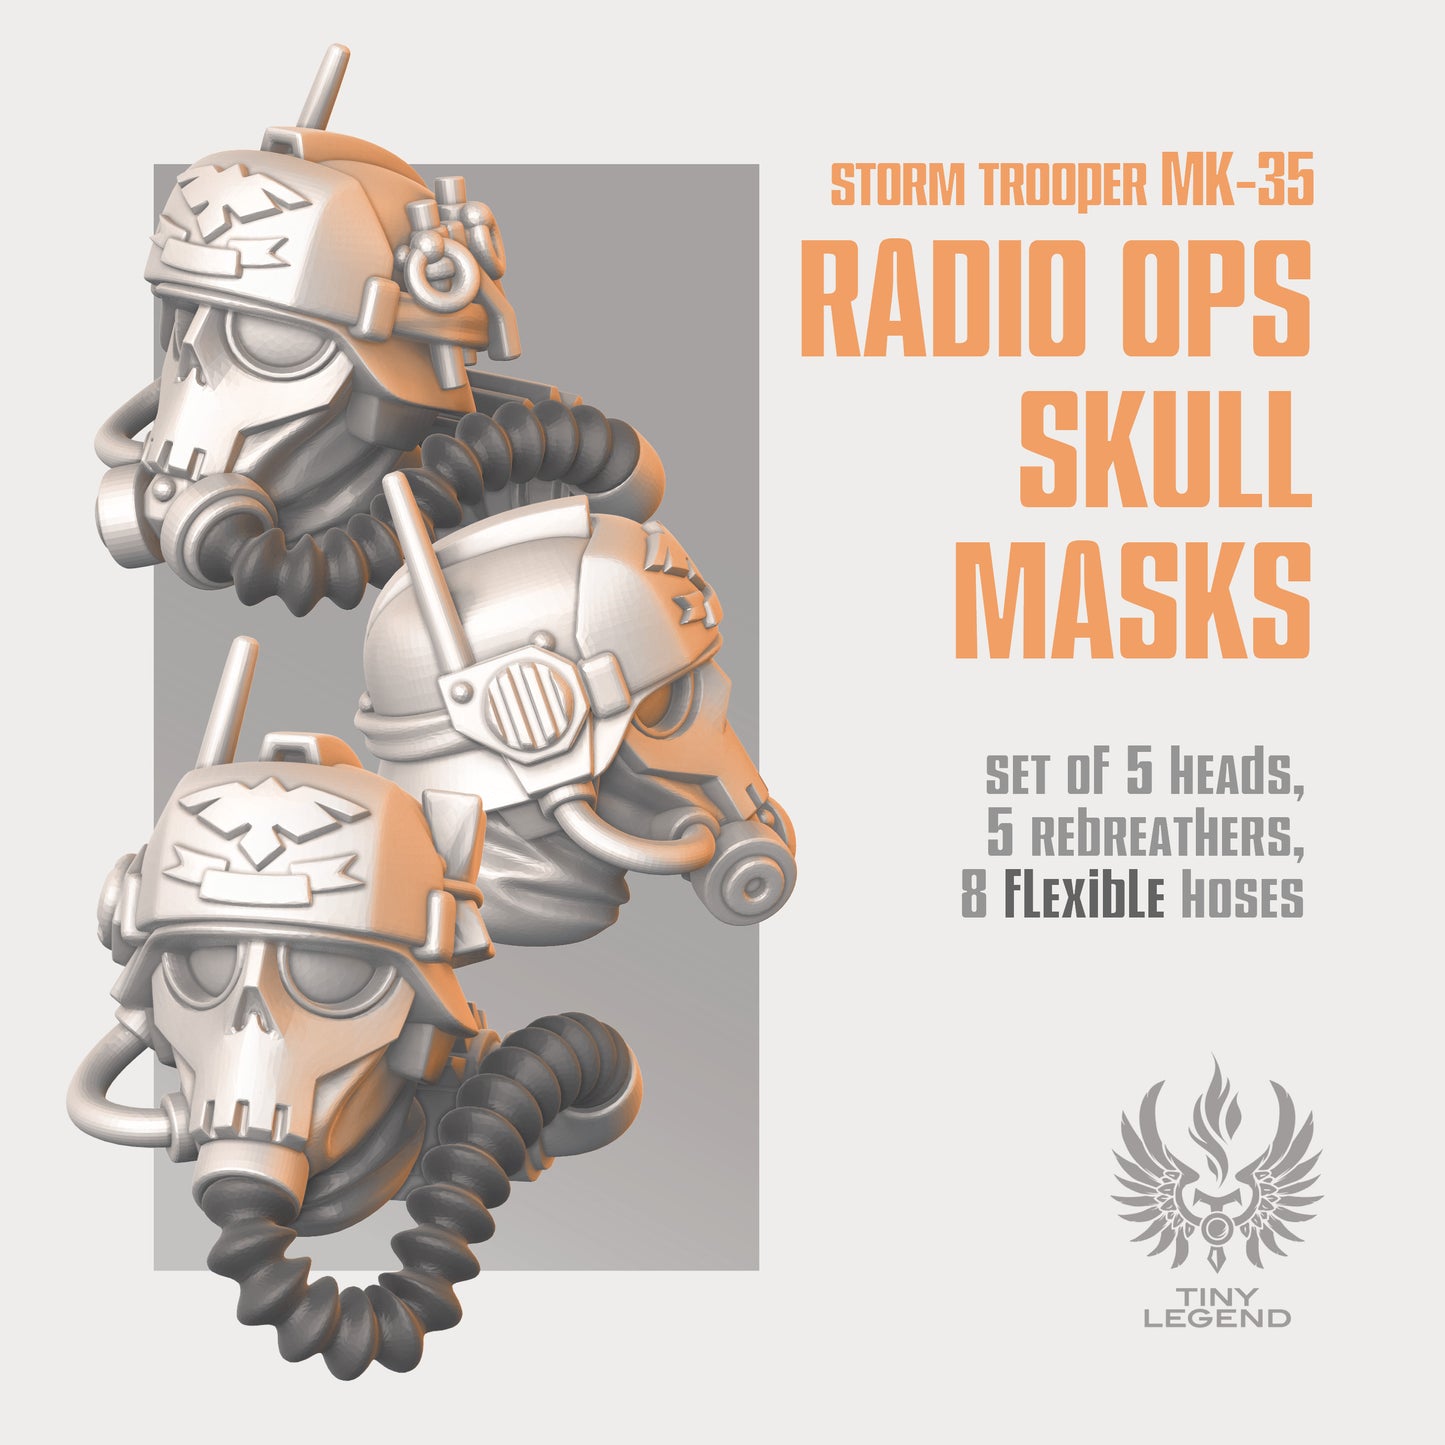 MK-35 Storm Trooper Radio Ops Skull Masks